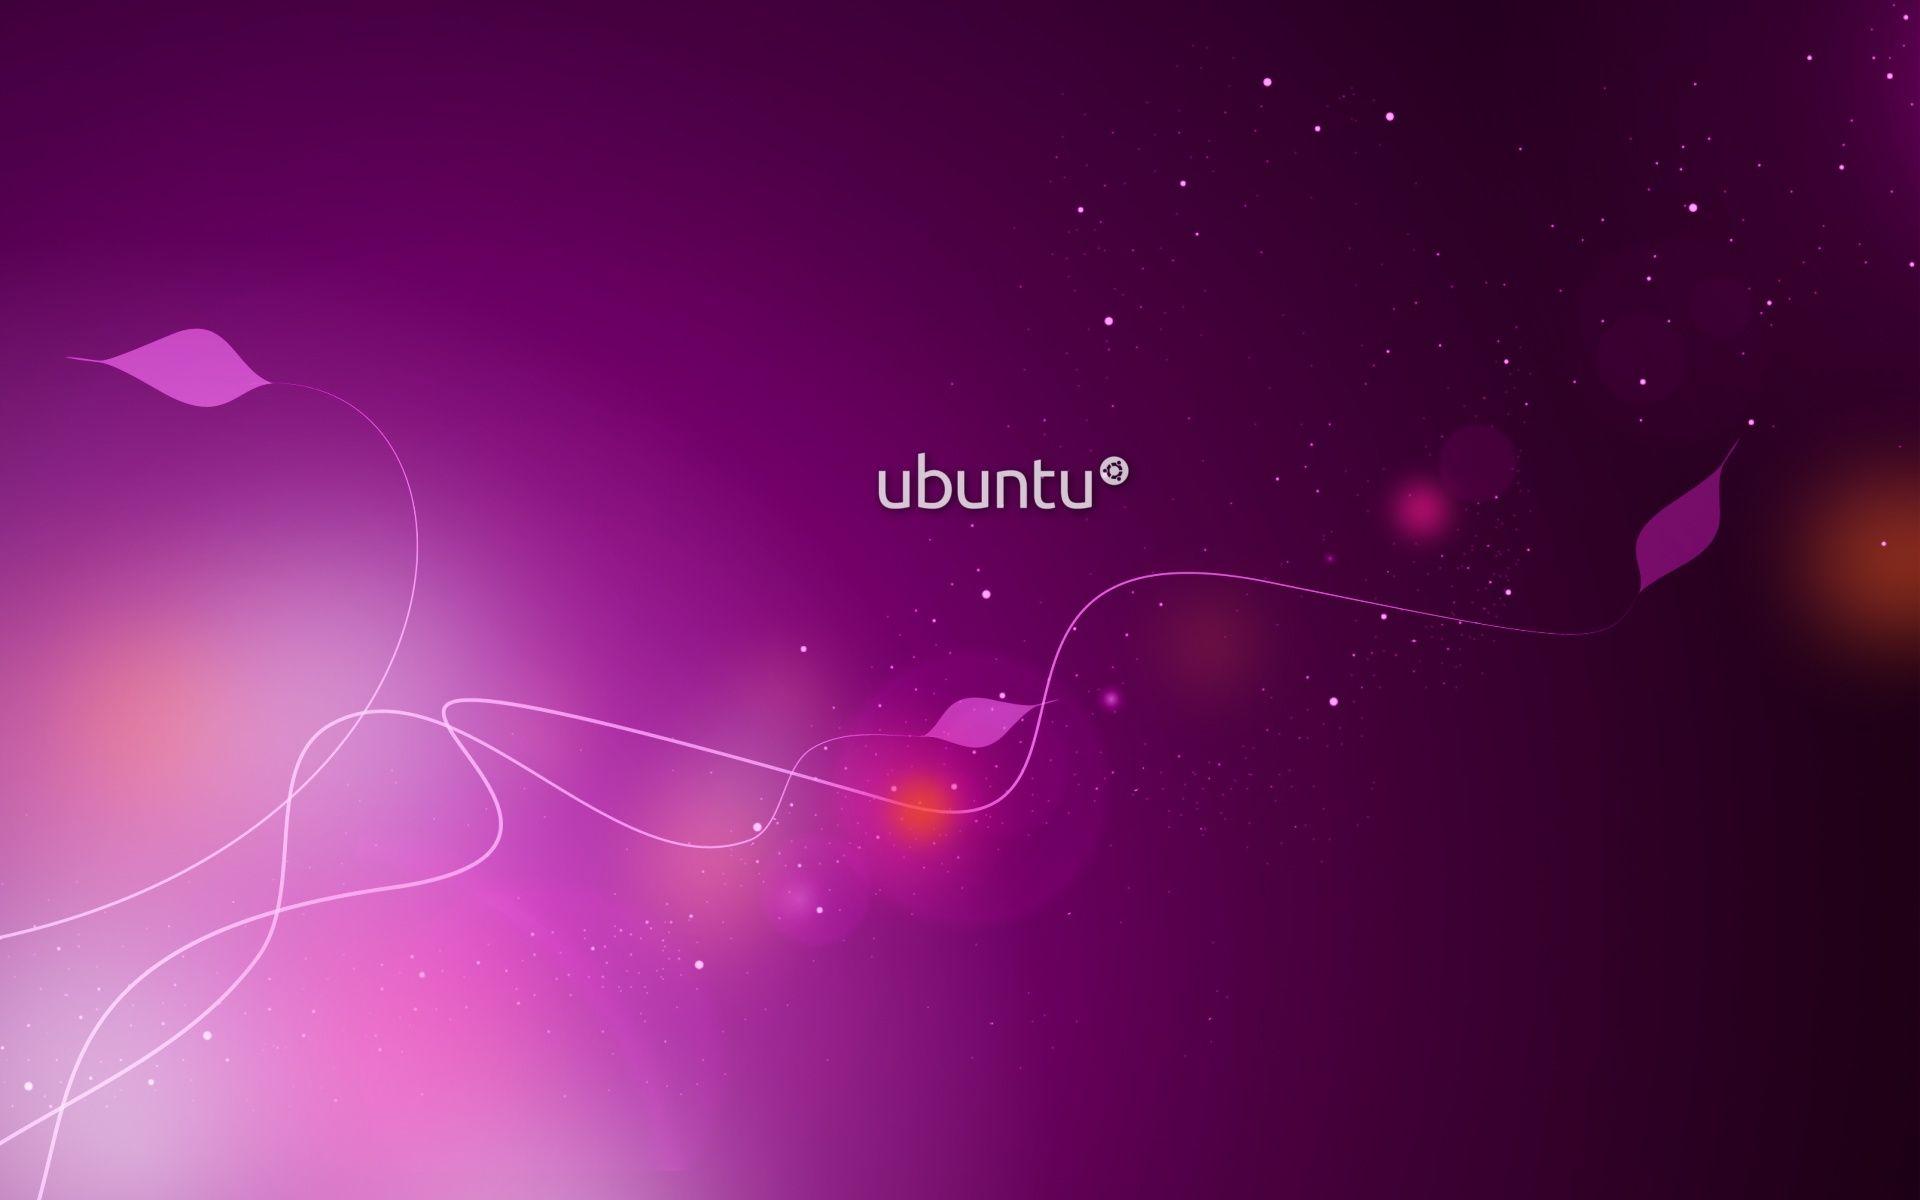 Ubuntu Full HD Wallpaper. AbstractWallpaperHD